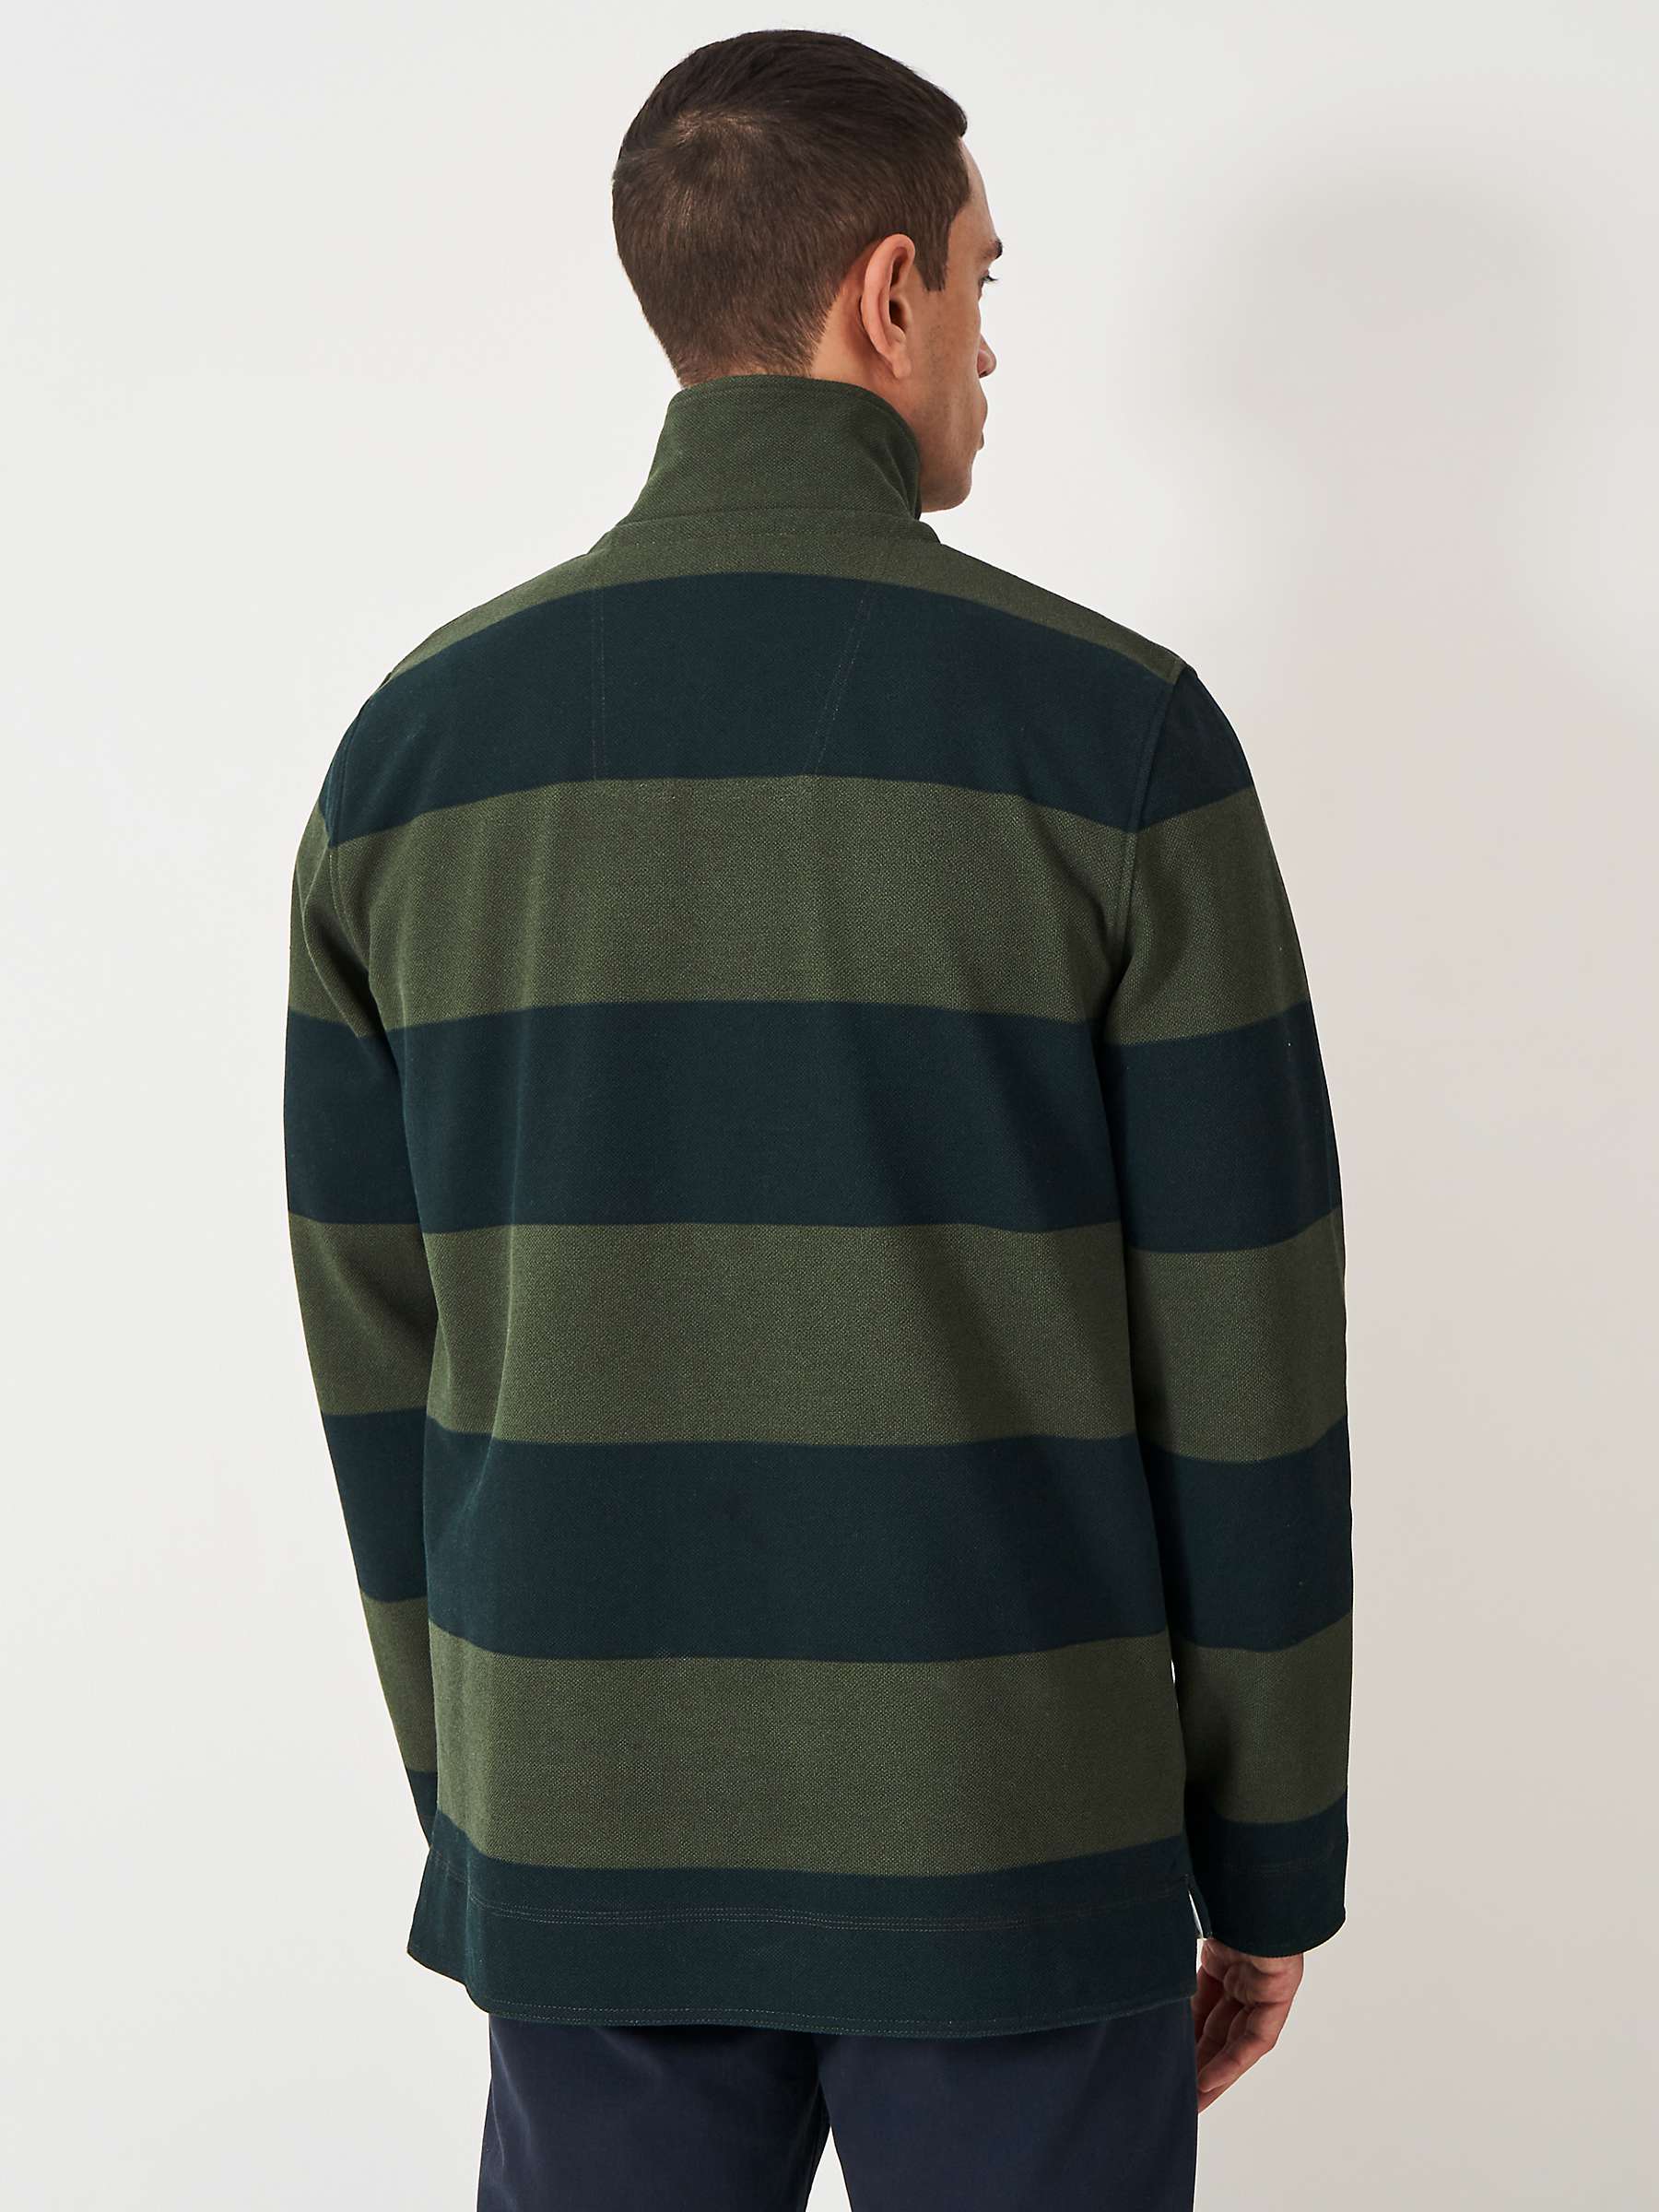 Buy Crew Clothing Padstow Pique Sweatshirt Online at johnlewis.com